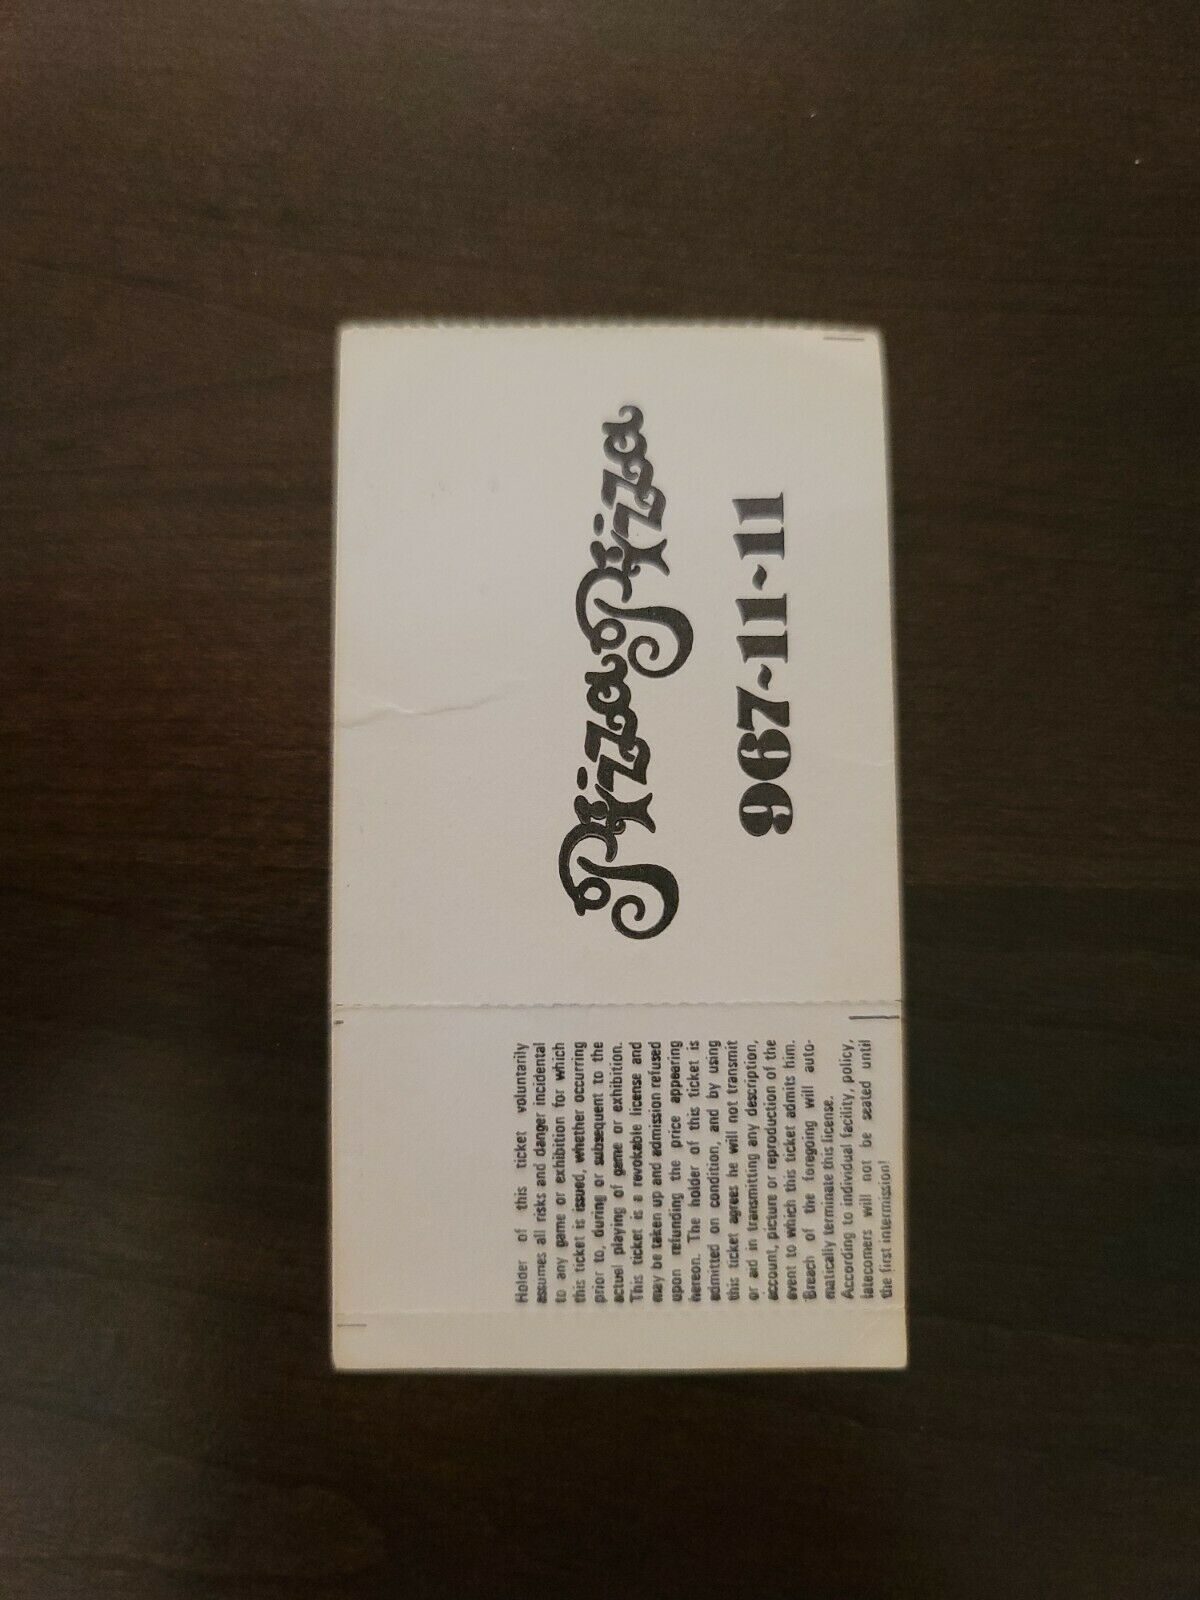 Motorhead 1983, Toronto Concert Hall Original Concert Ticket Stub